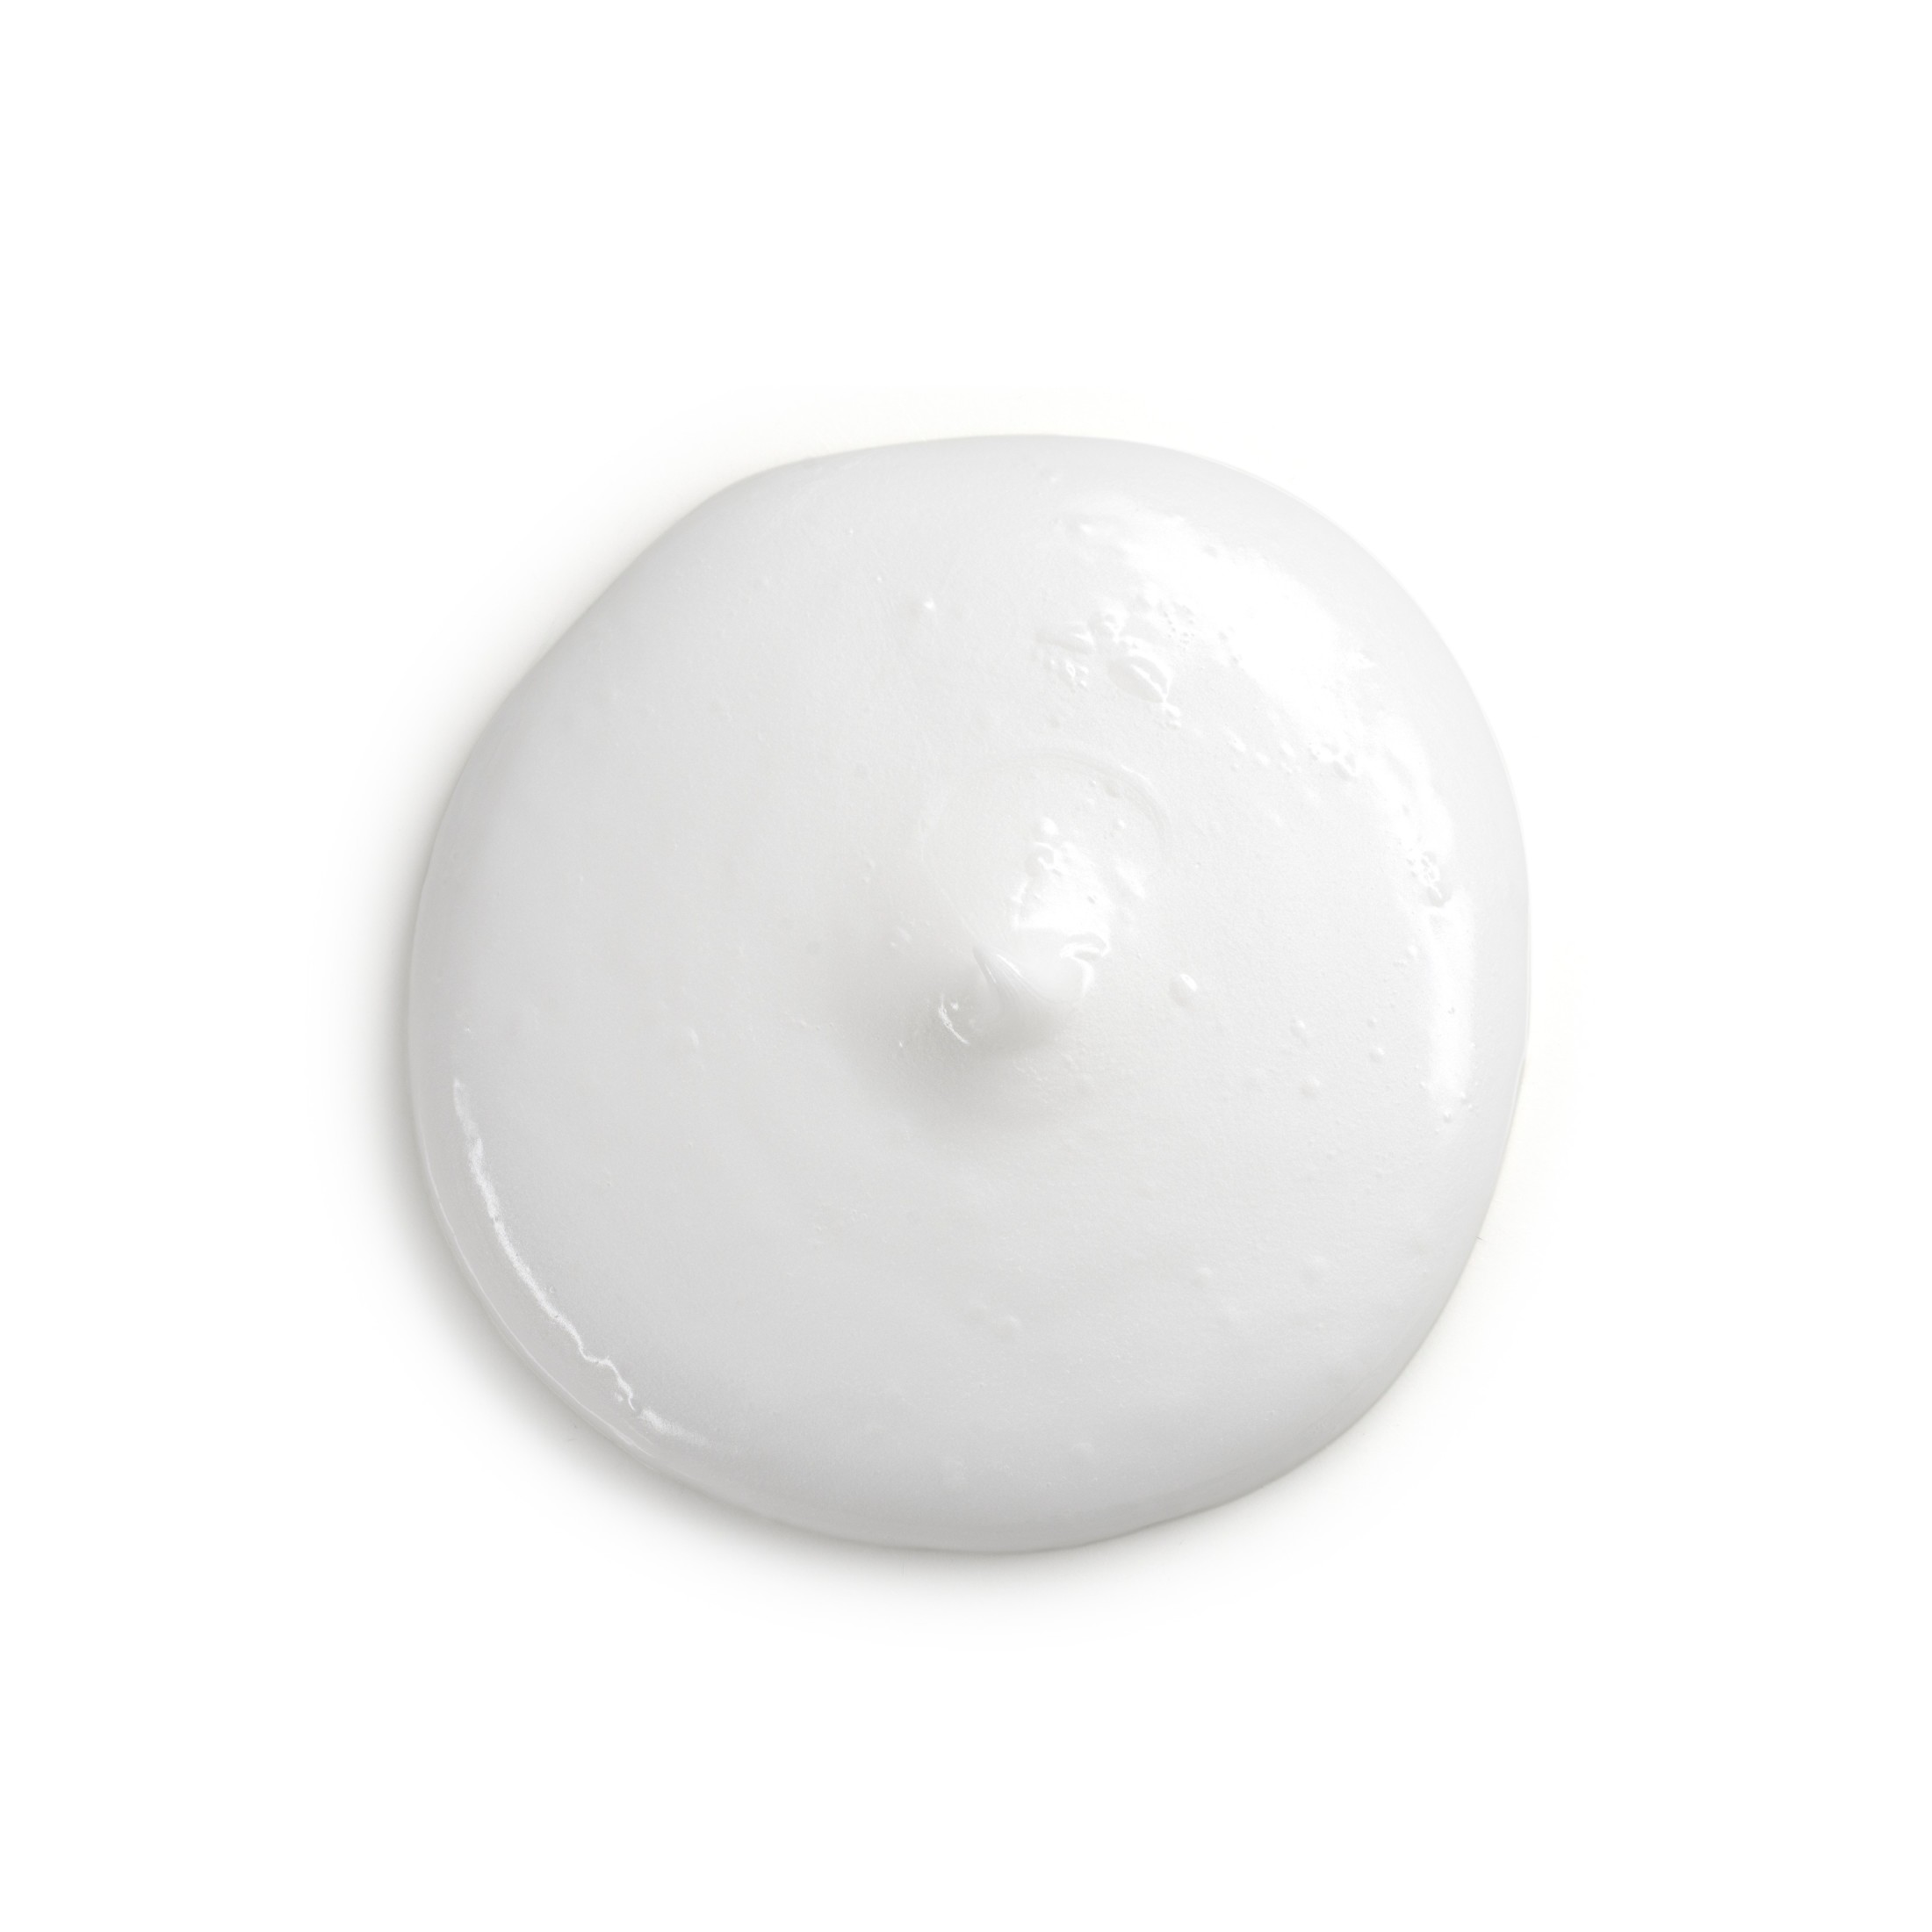 Neutrogena Deep Clean Oil-Free Daily Facial Cream Cleanser, 7 fl. oz - image 2 of 12